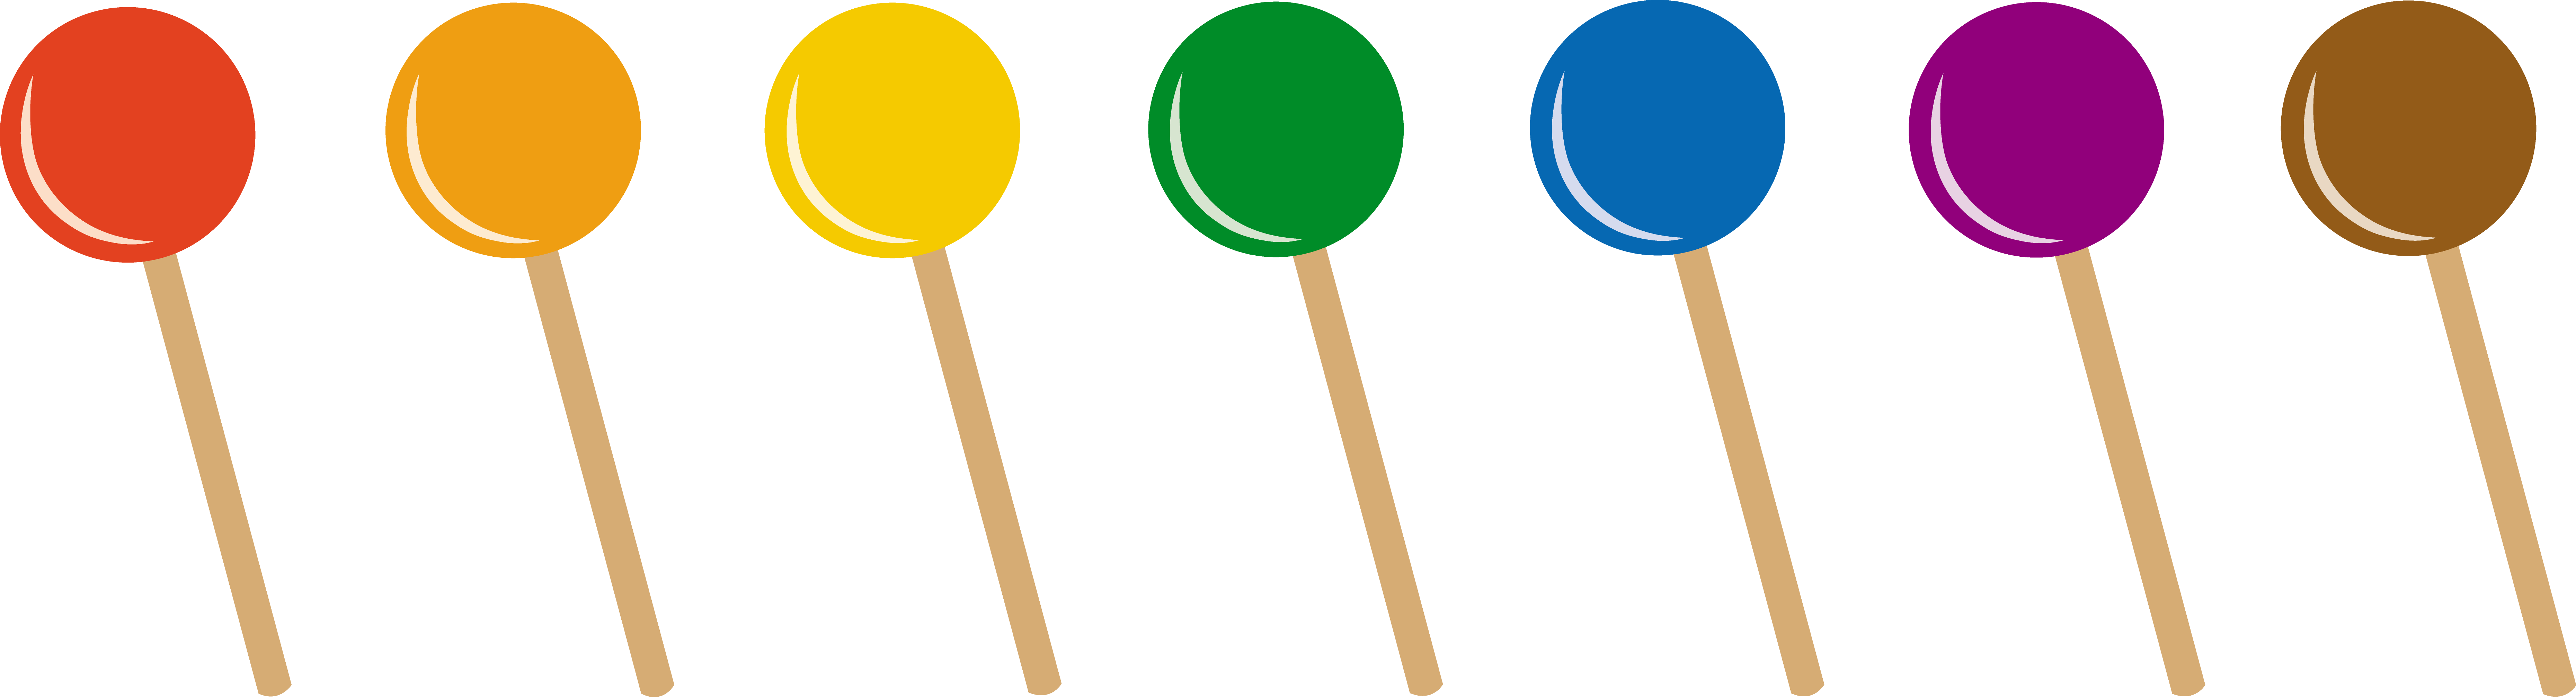 Lollipops in Seven Flavors - Free Clip Art